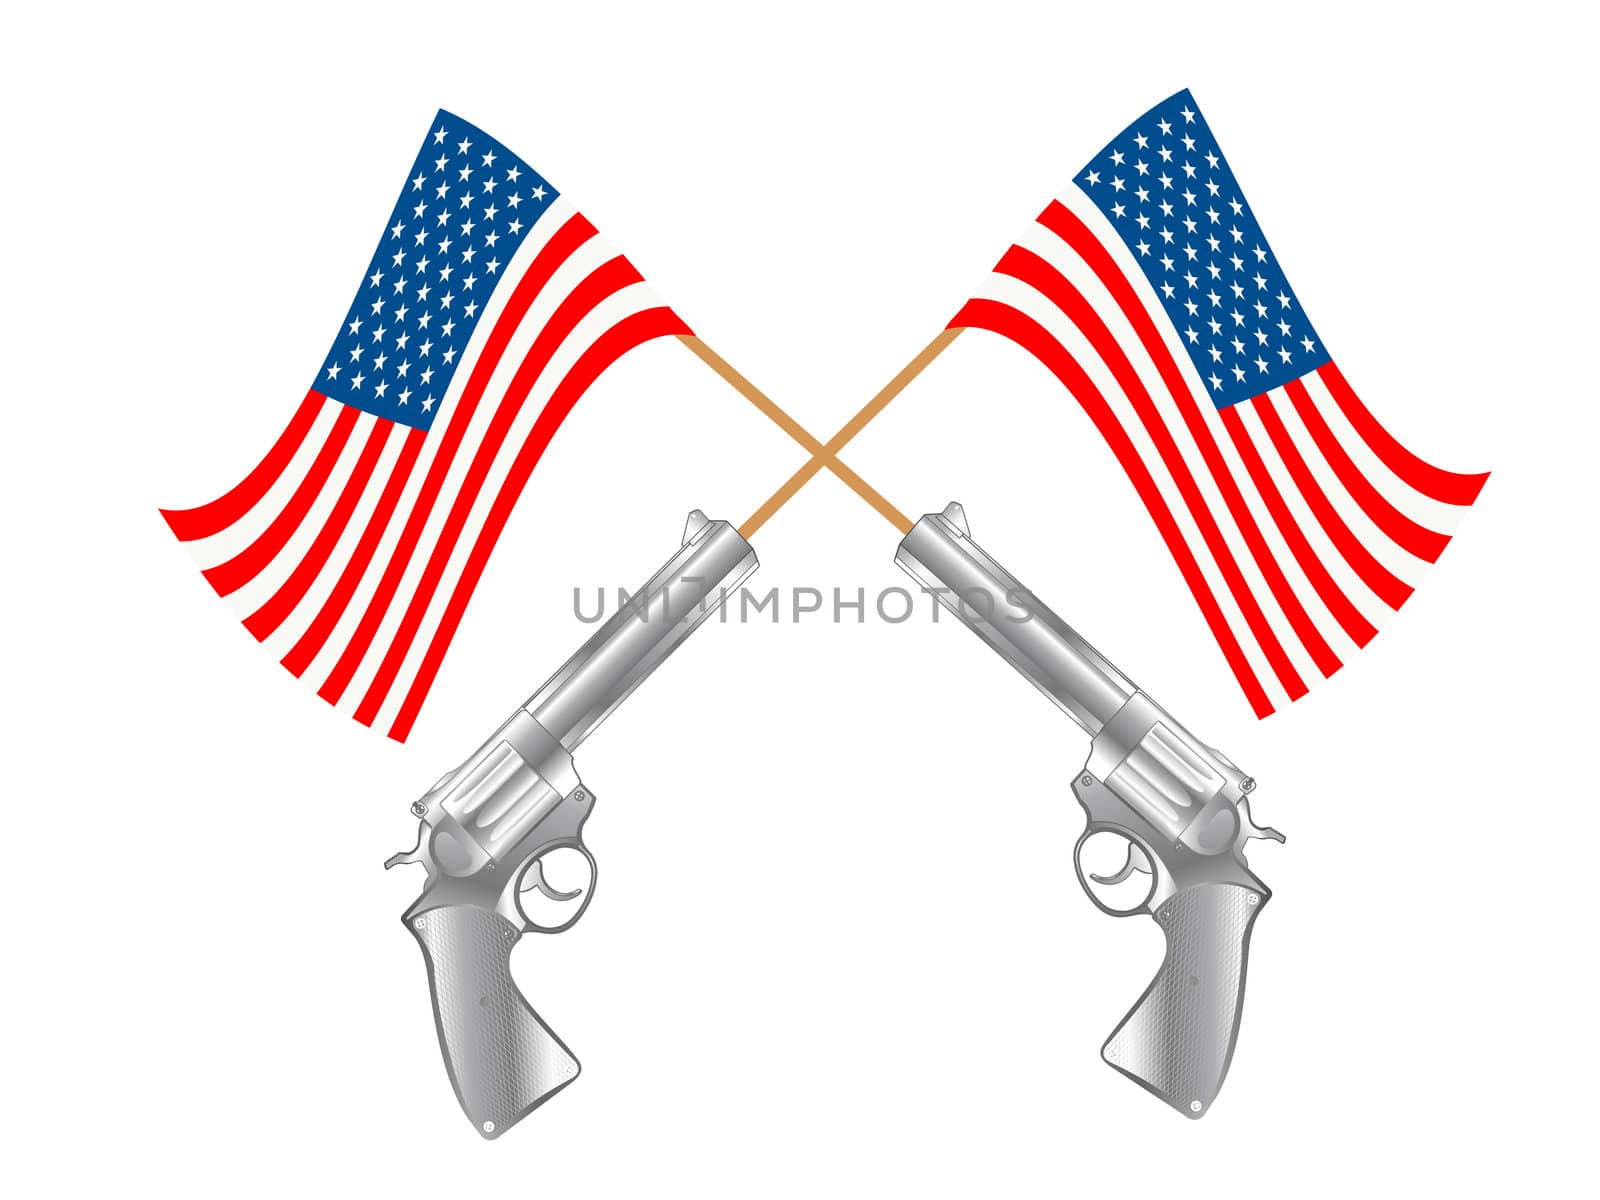 USA FLAG AND GUNS by Lirch